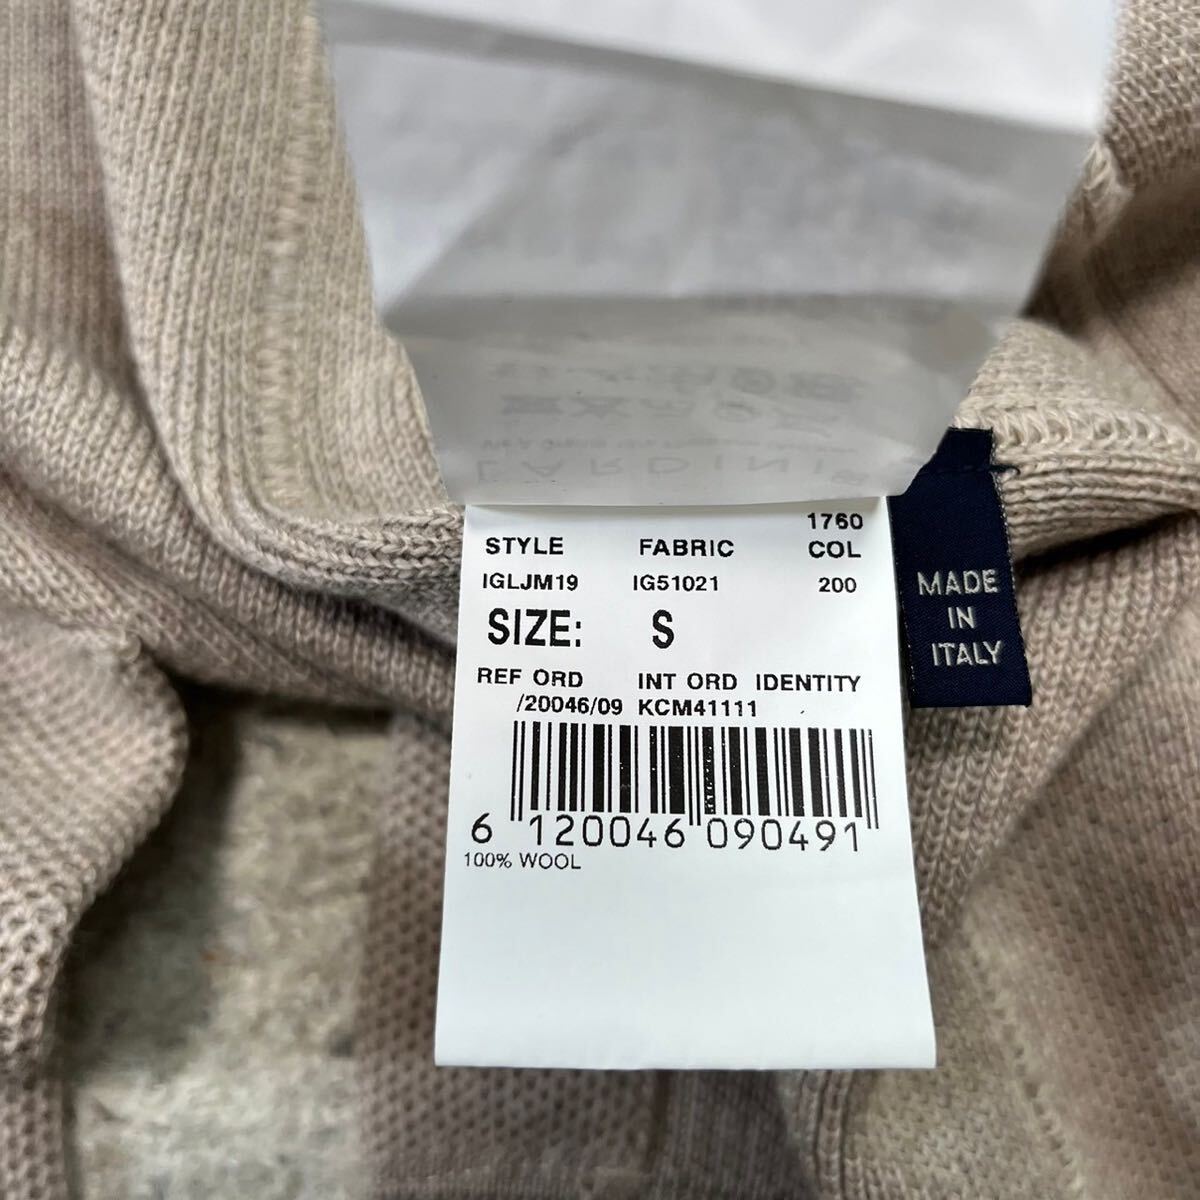 [ unused ] Lardini LARDINI tailored jacket cardigan knitted deer. . stretch beige tag attaching 